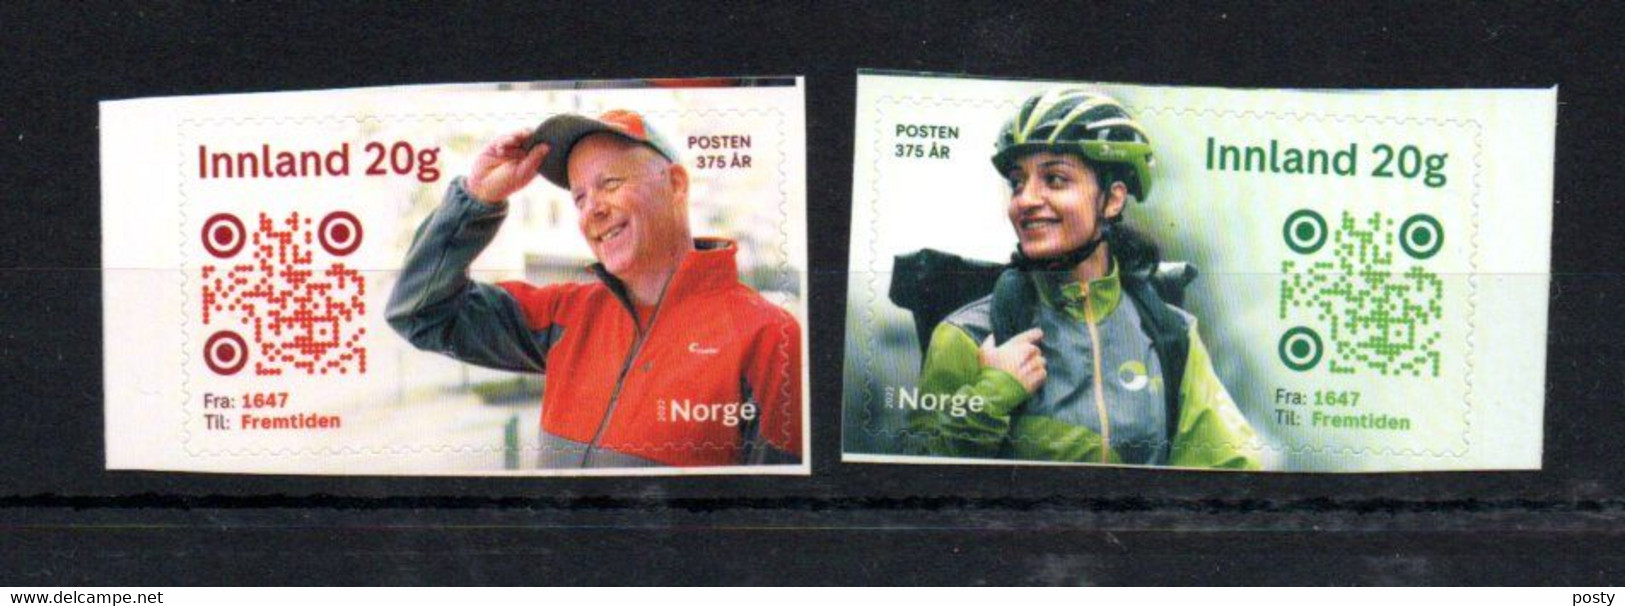 NORVEGE - NORWAY - 2022 - FACTEUR - MAILMAN - 375éme ANNIVERSAIRE - 375th ANNIVERSARY - - Unused Stamps